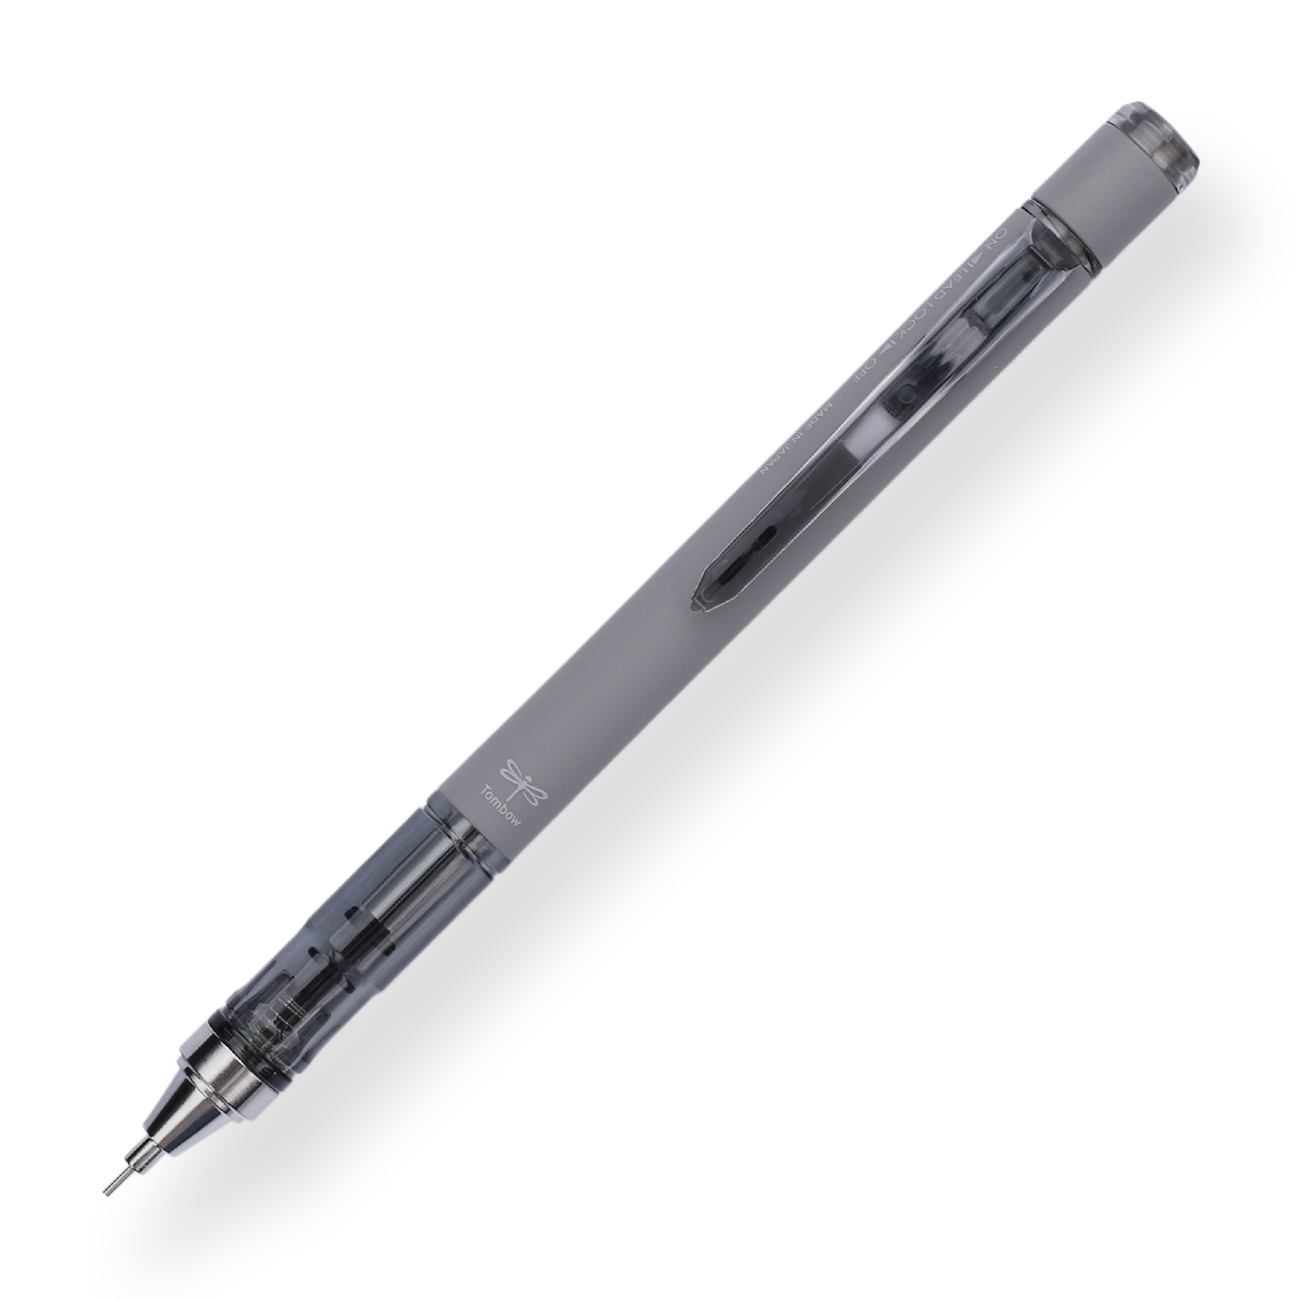 Uni Pin Fineliner Drawing Pen - Dark Grey Tone - 0.5mm - Box of 12 